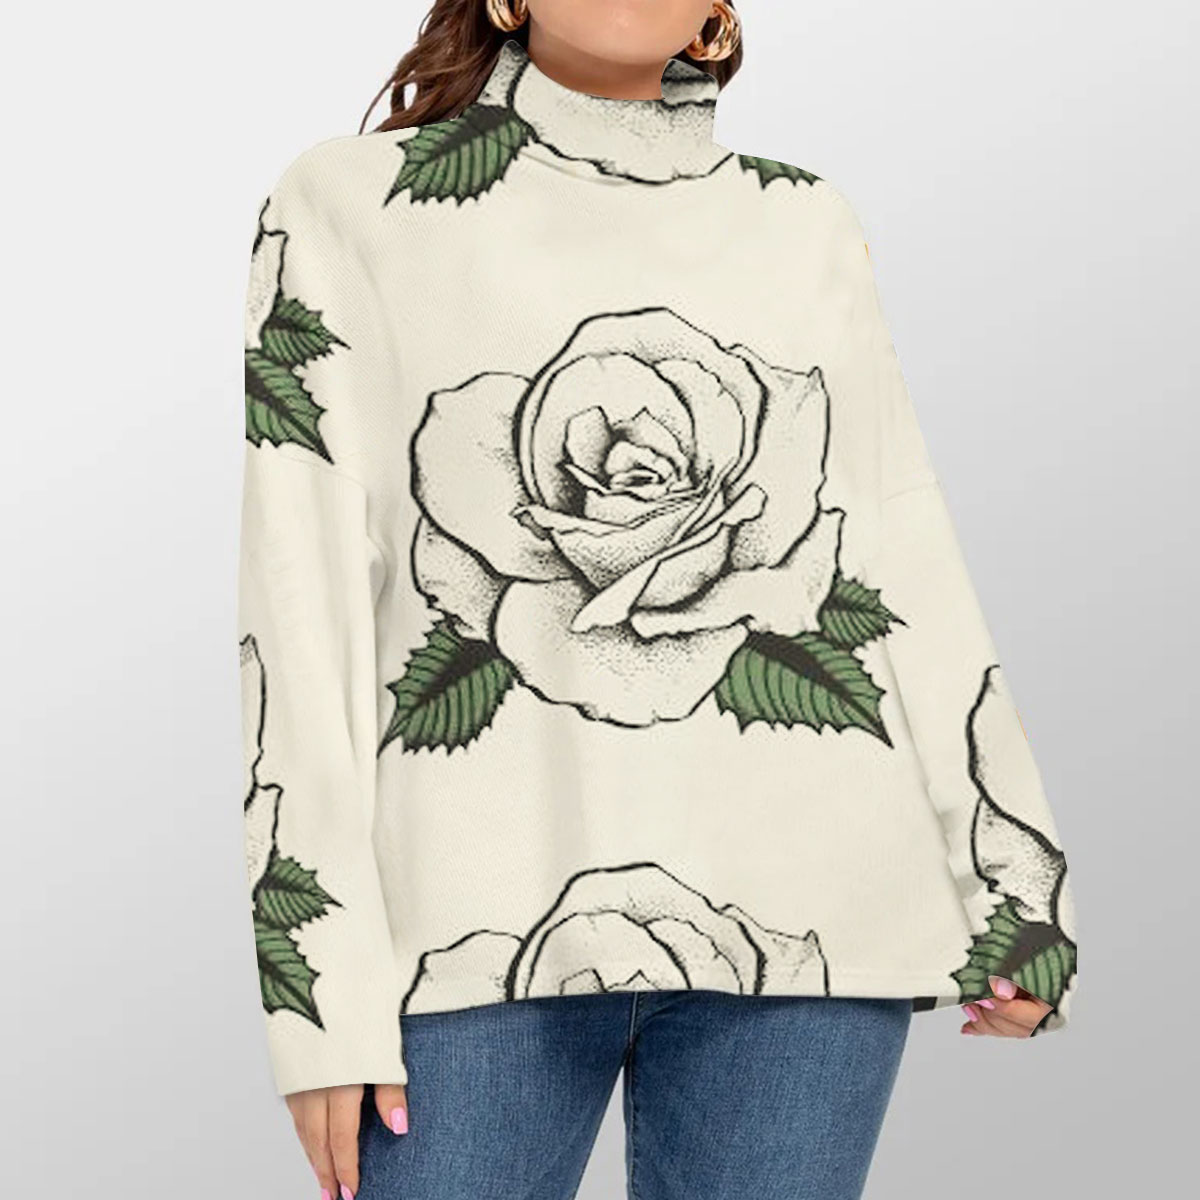 Classic White Rose Turtleneck Sweater